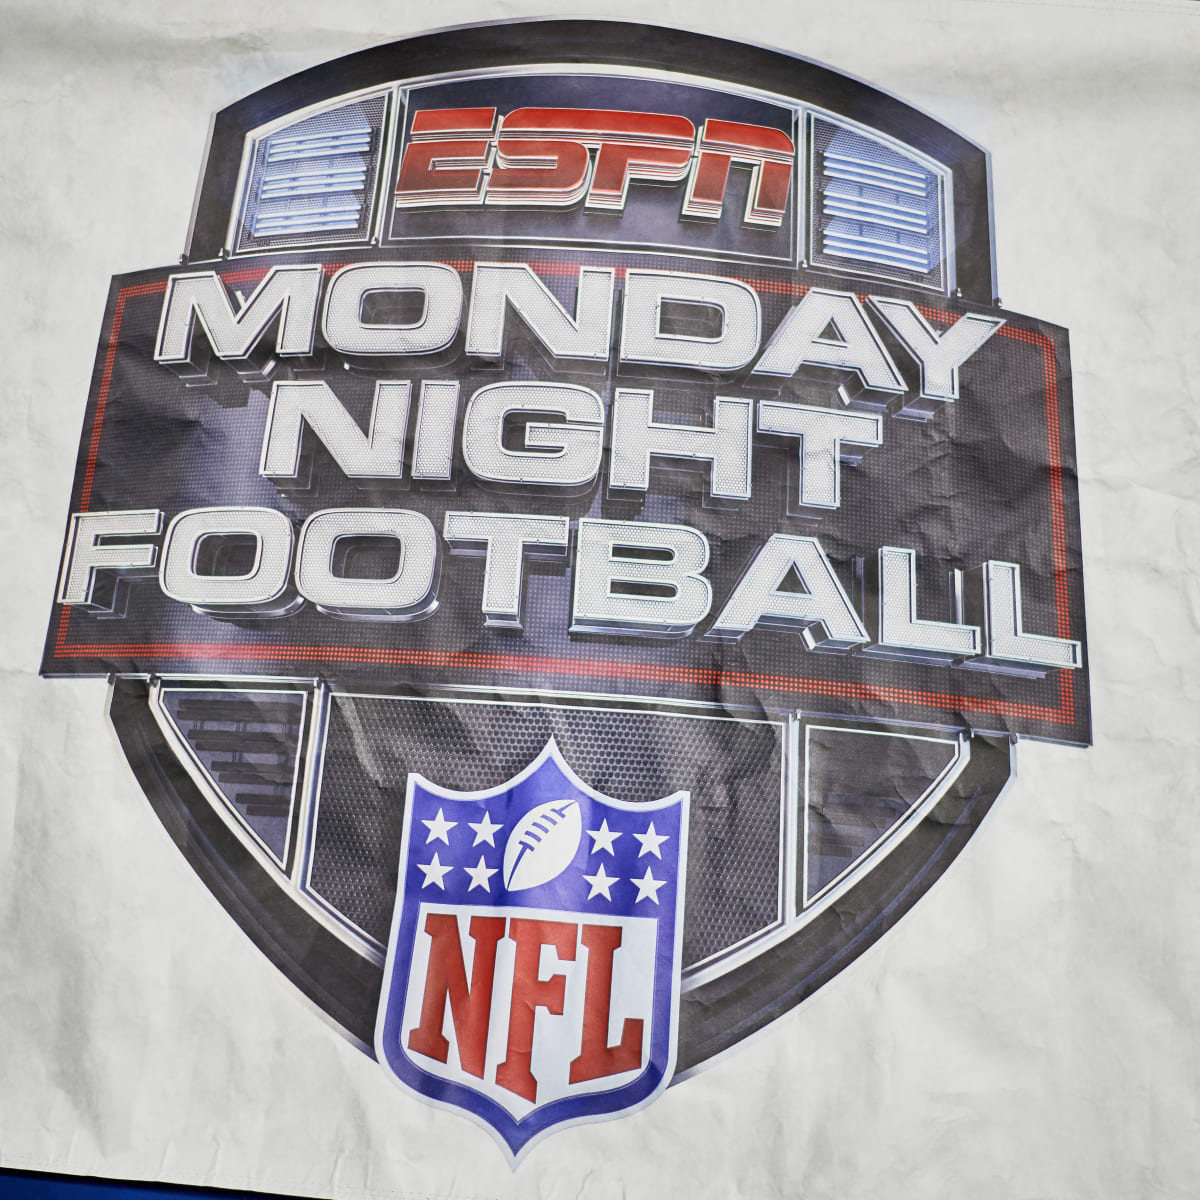 NFL ratings: Tuesday night football beats MNF - Sports Media Watch